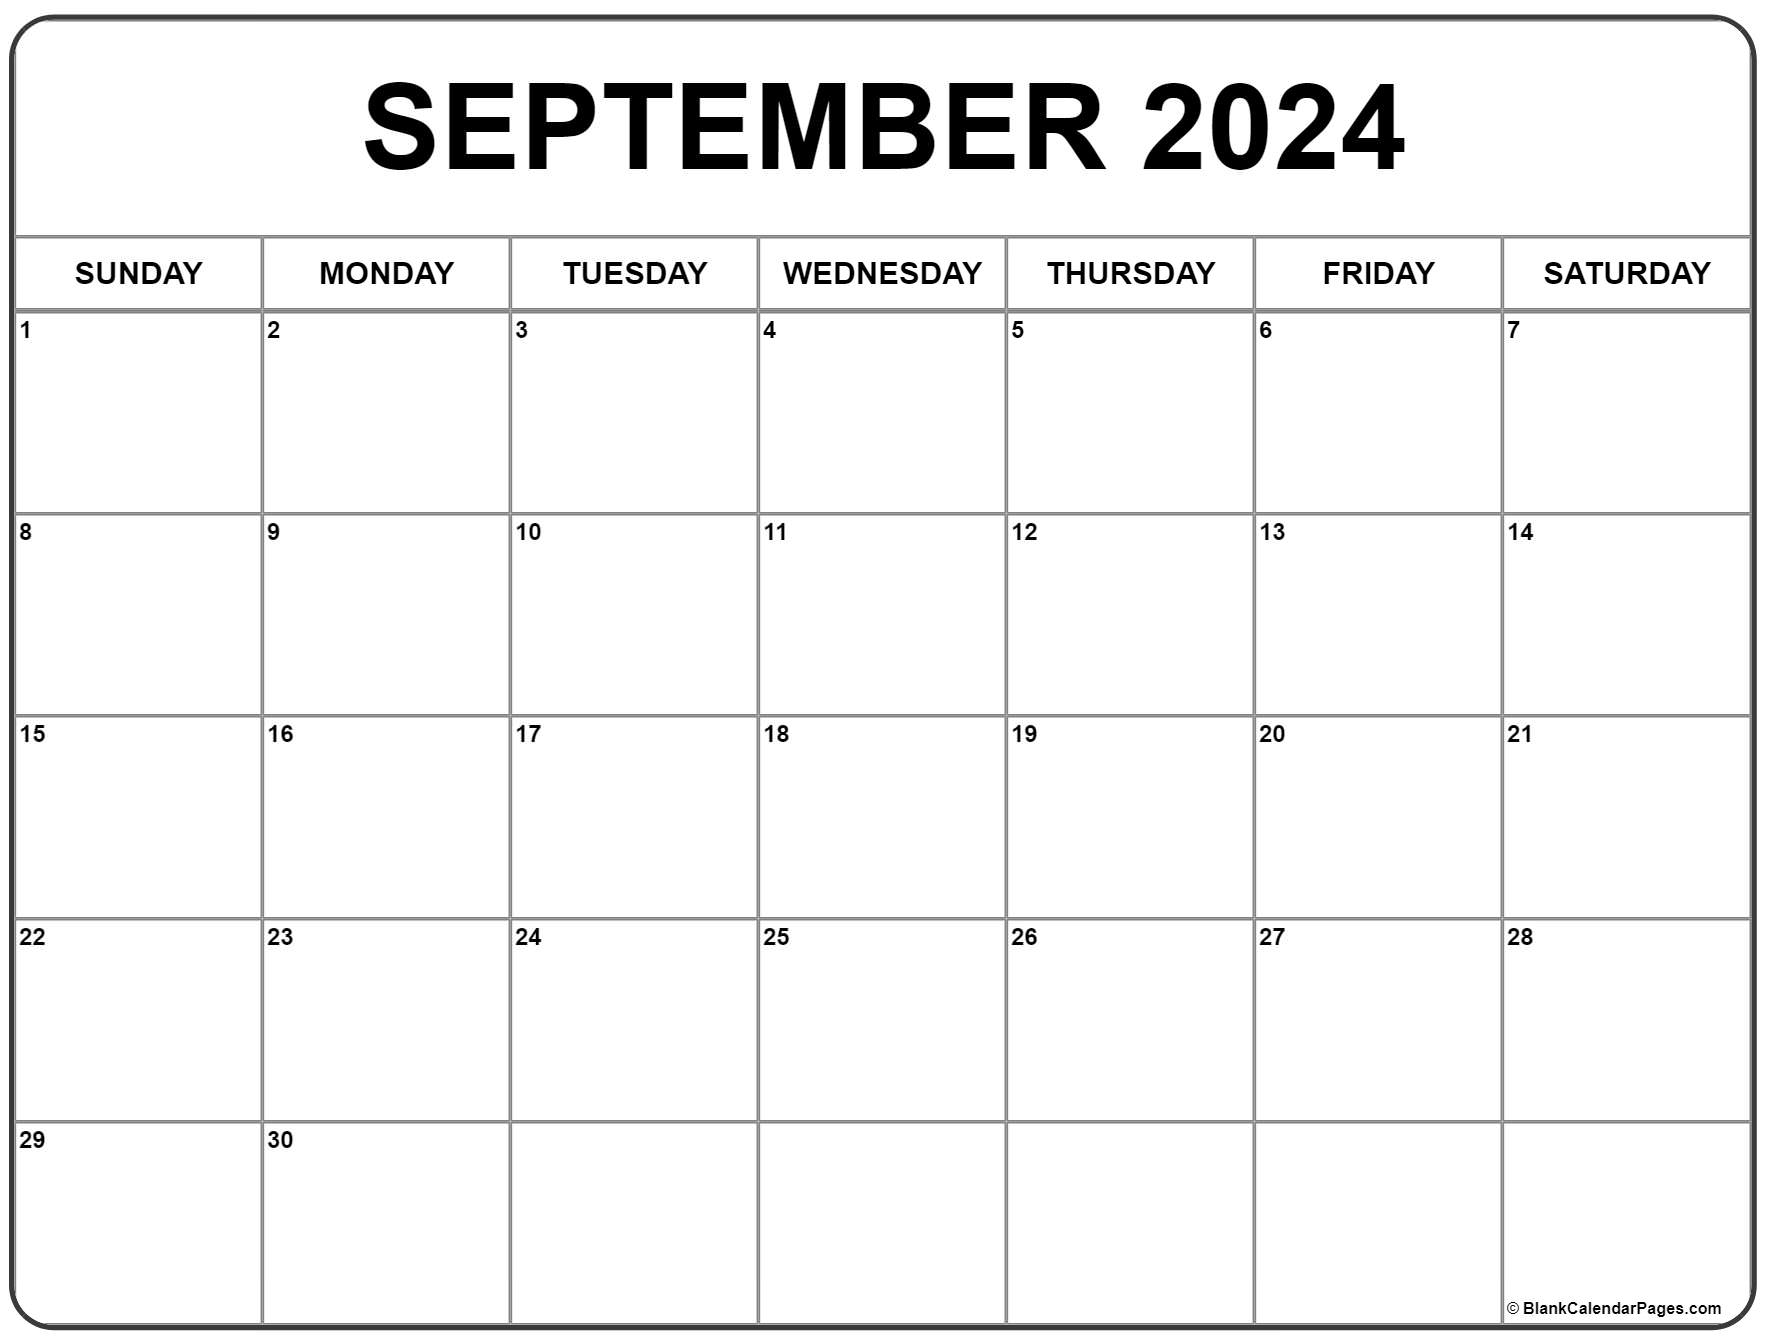 September 2024 Calendar | Free Printable Calendar for September 2024 Printable Calendar Free